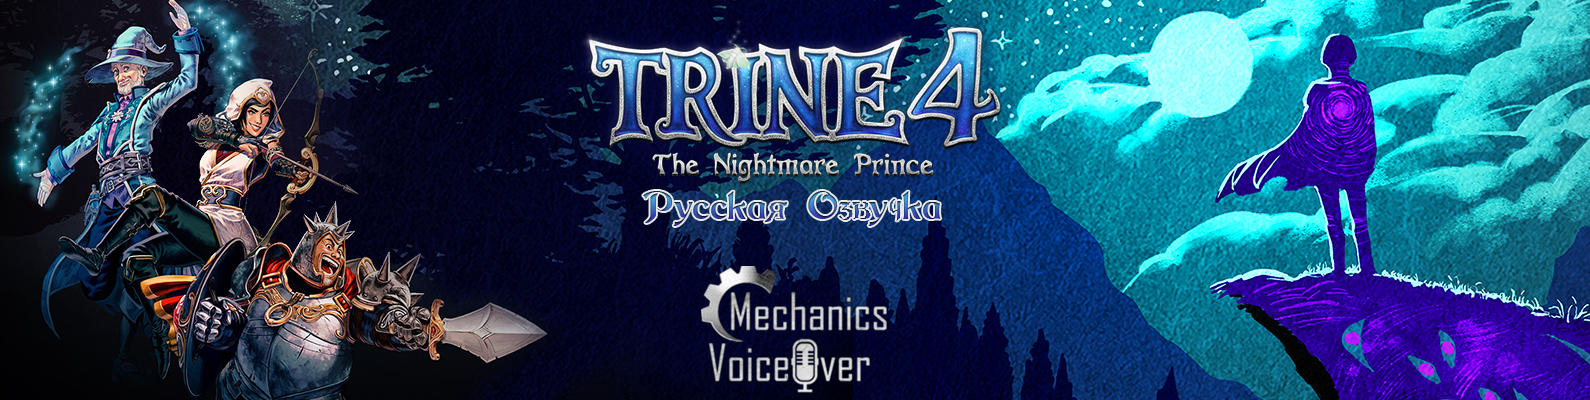 Trine 4 Amadeus. Trine 4: the Nightmare Prince название эпизодов. Trine 3 русификатор звук. Trine 4 - the Nightmare Prince рыцарь. Mechanic voice